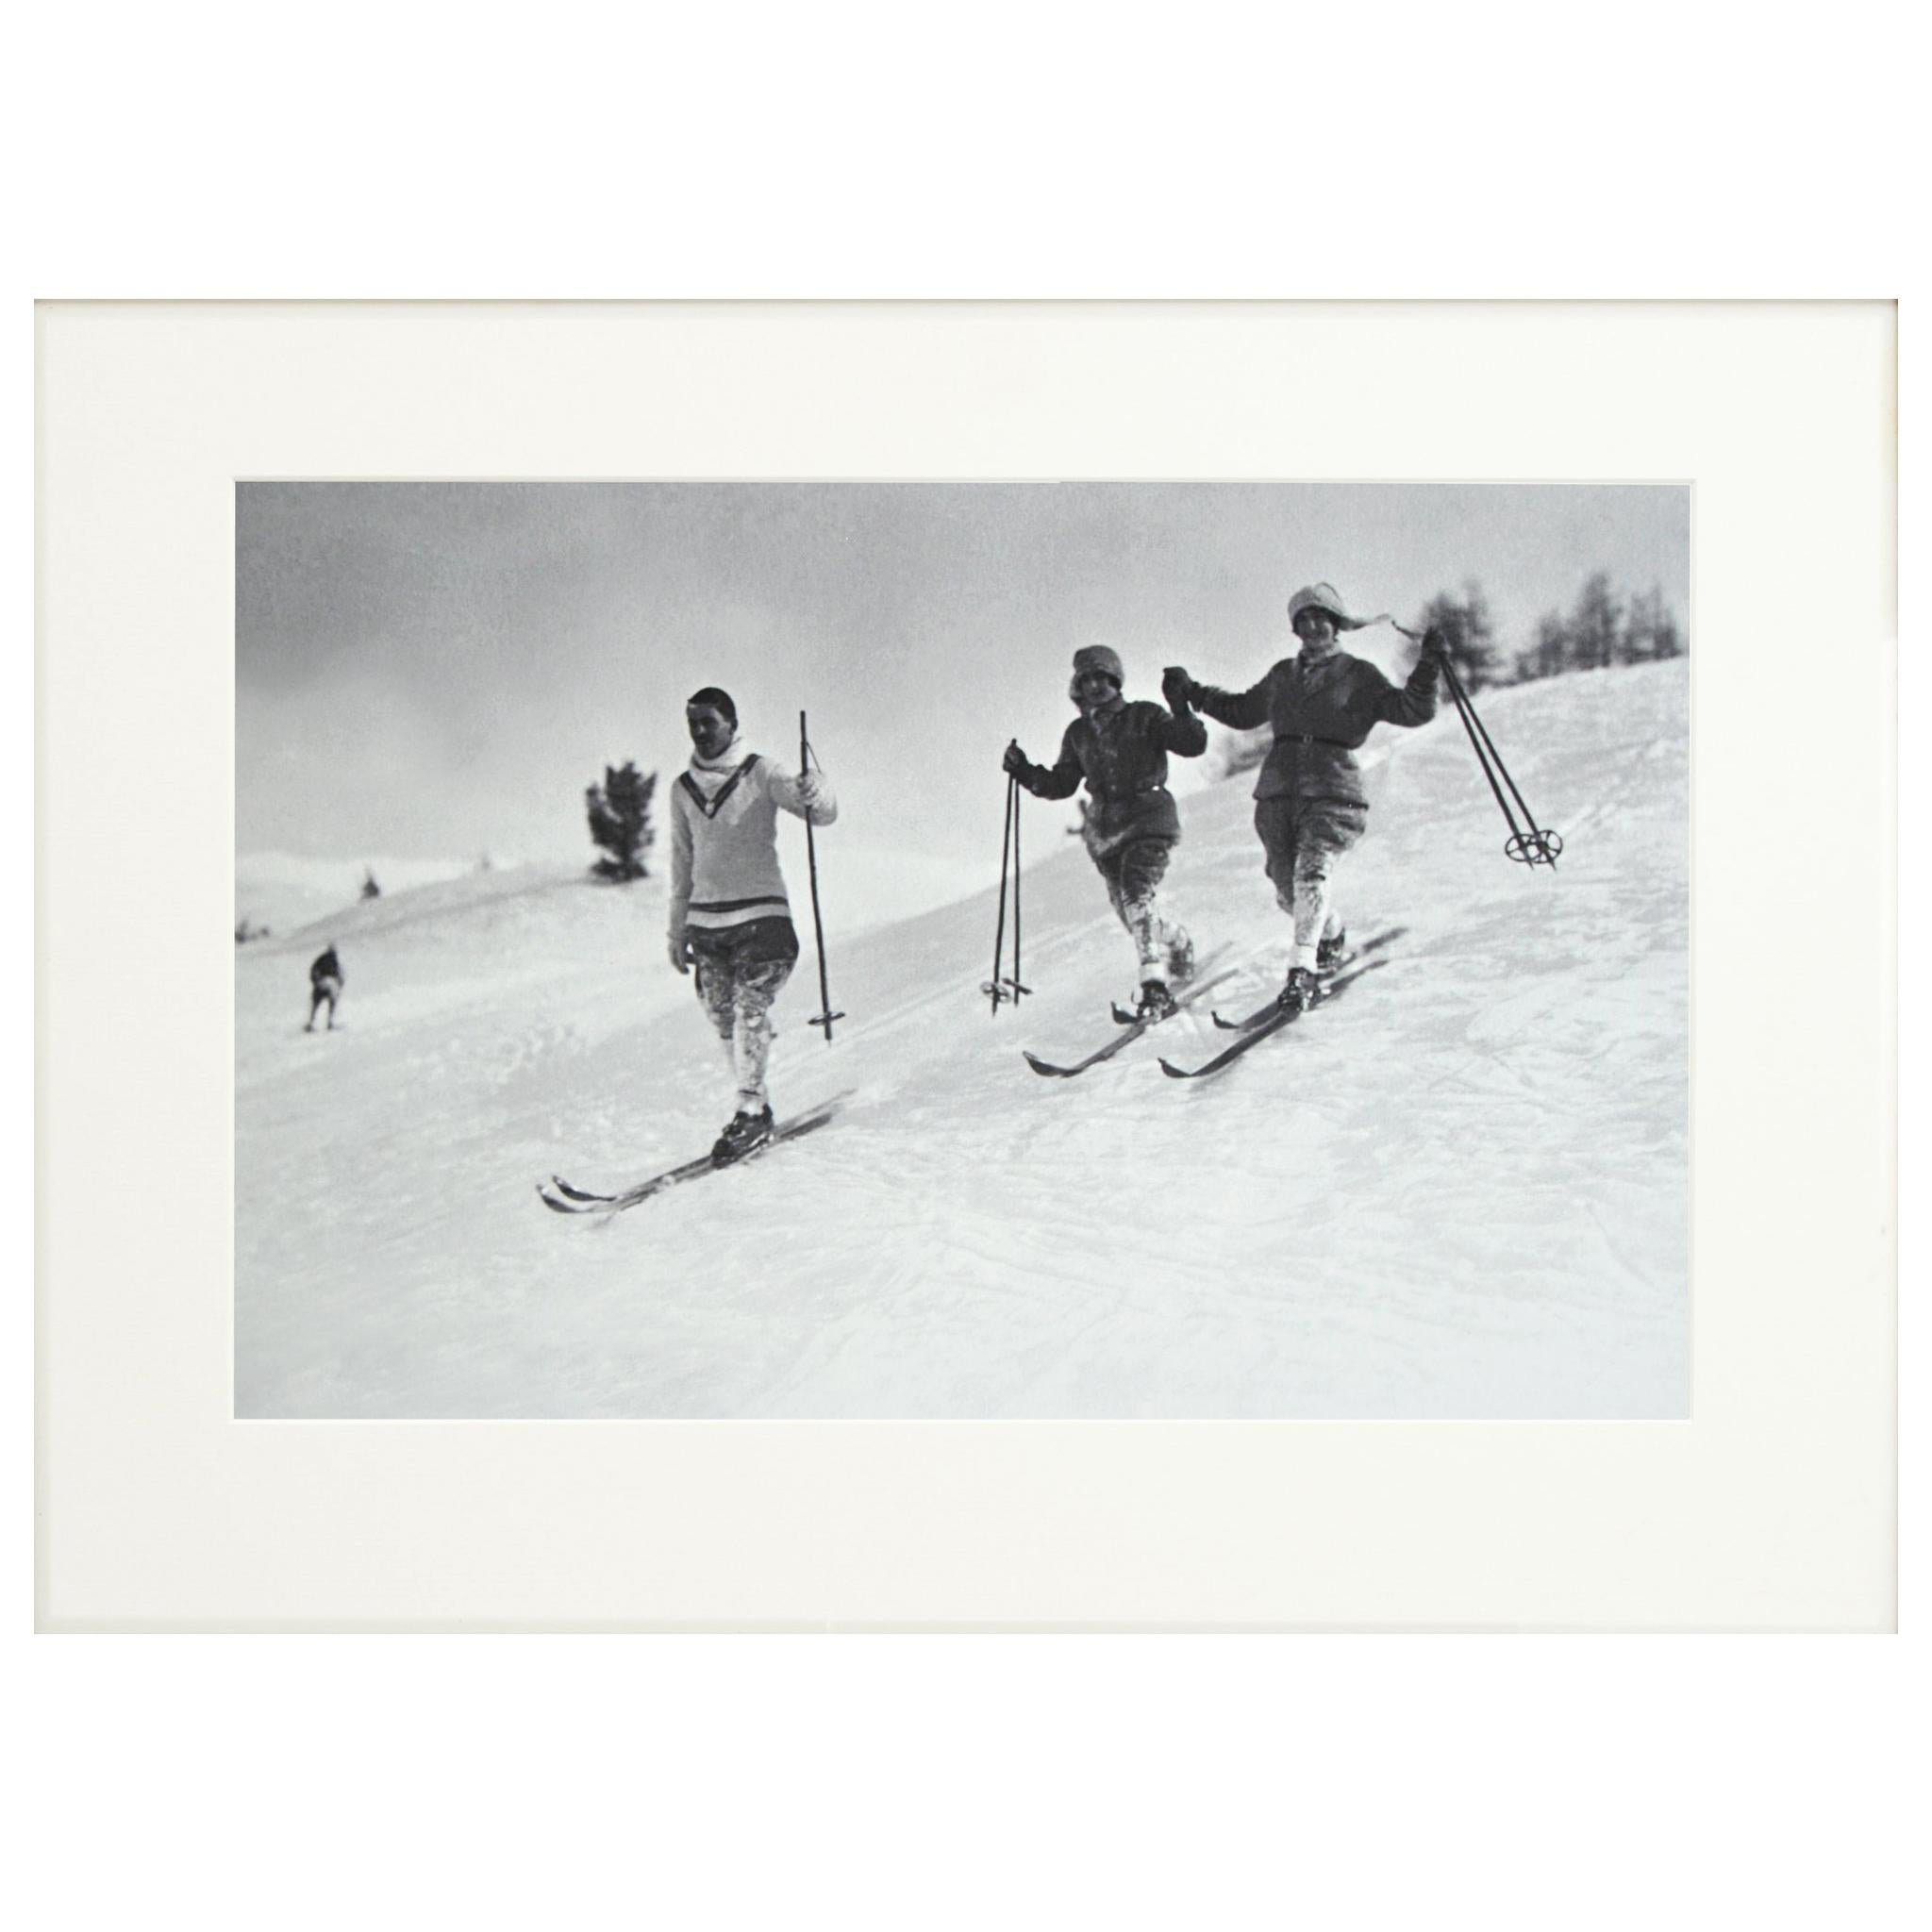 Alpine Ski Photograph, 'St. Moritz' Taken from Original 1930s Photograph For Sale